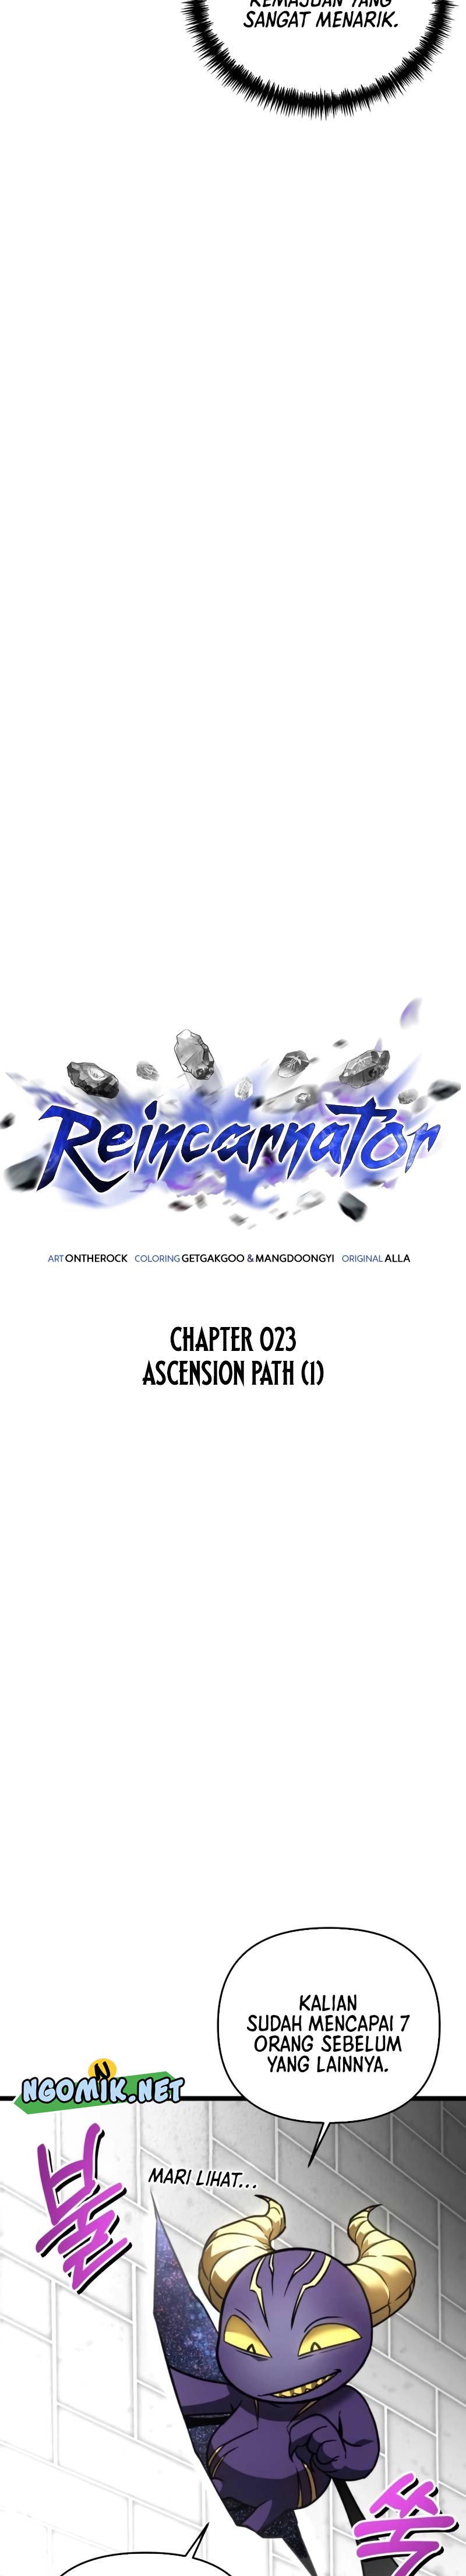 Reincarnator Chapter 23 Image 20